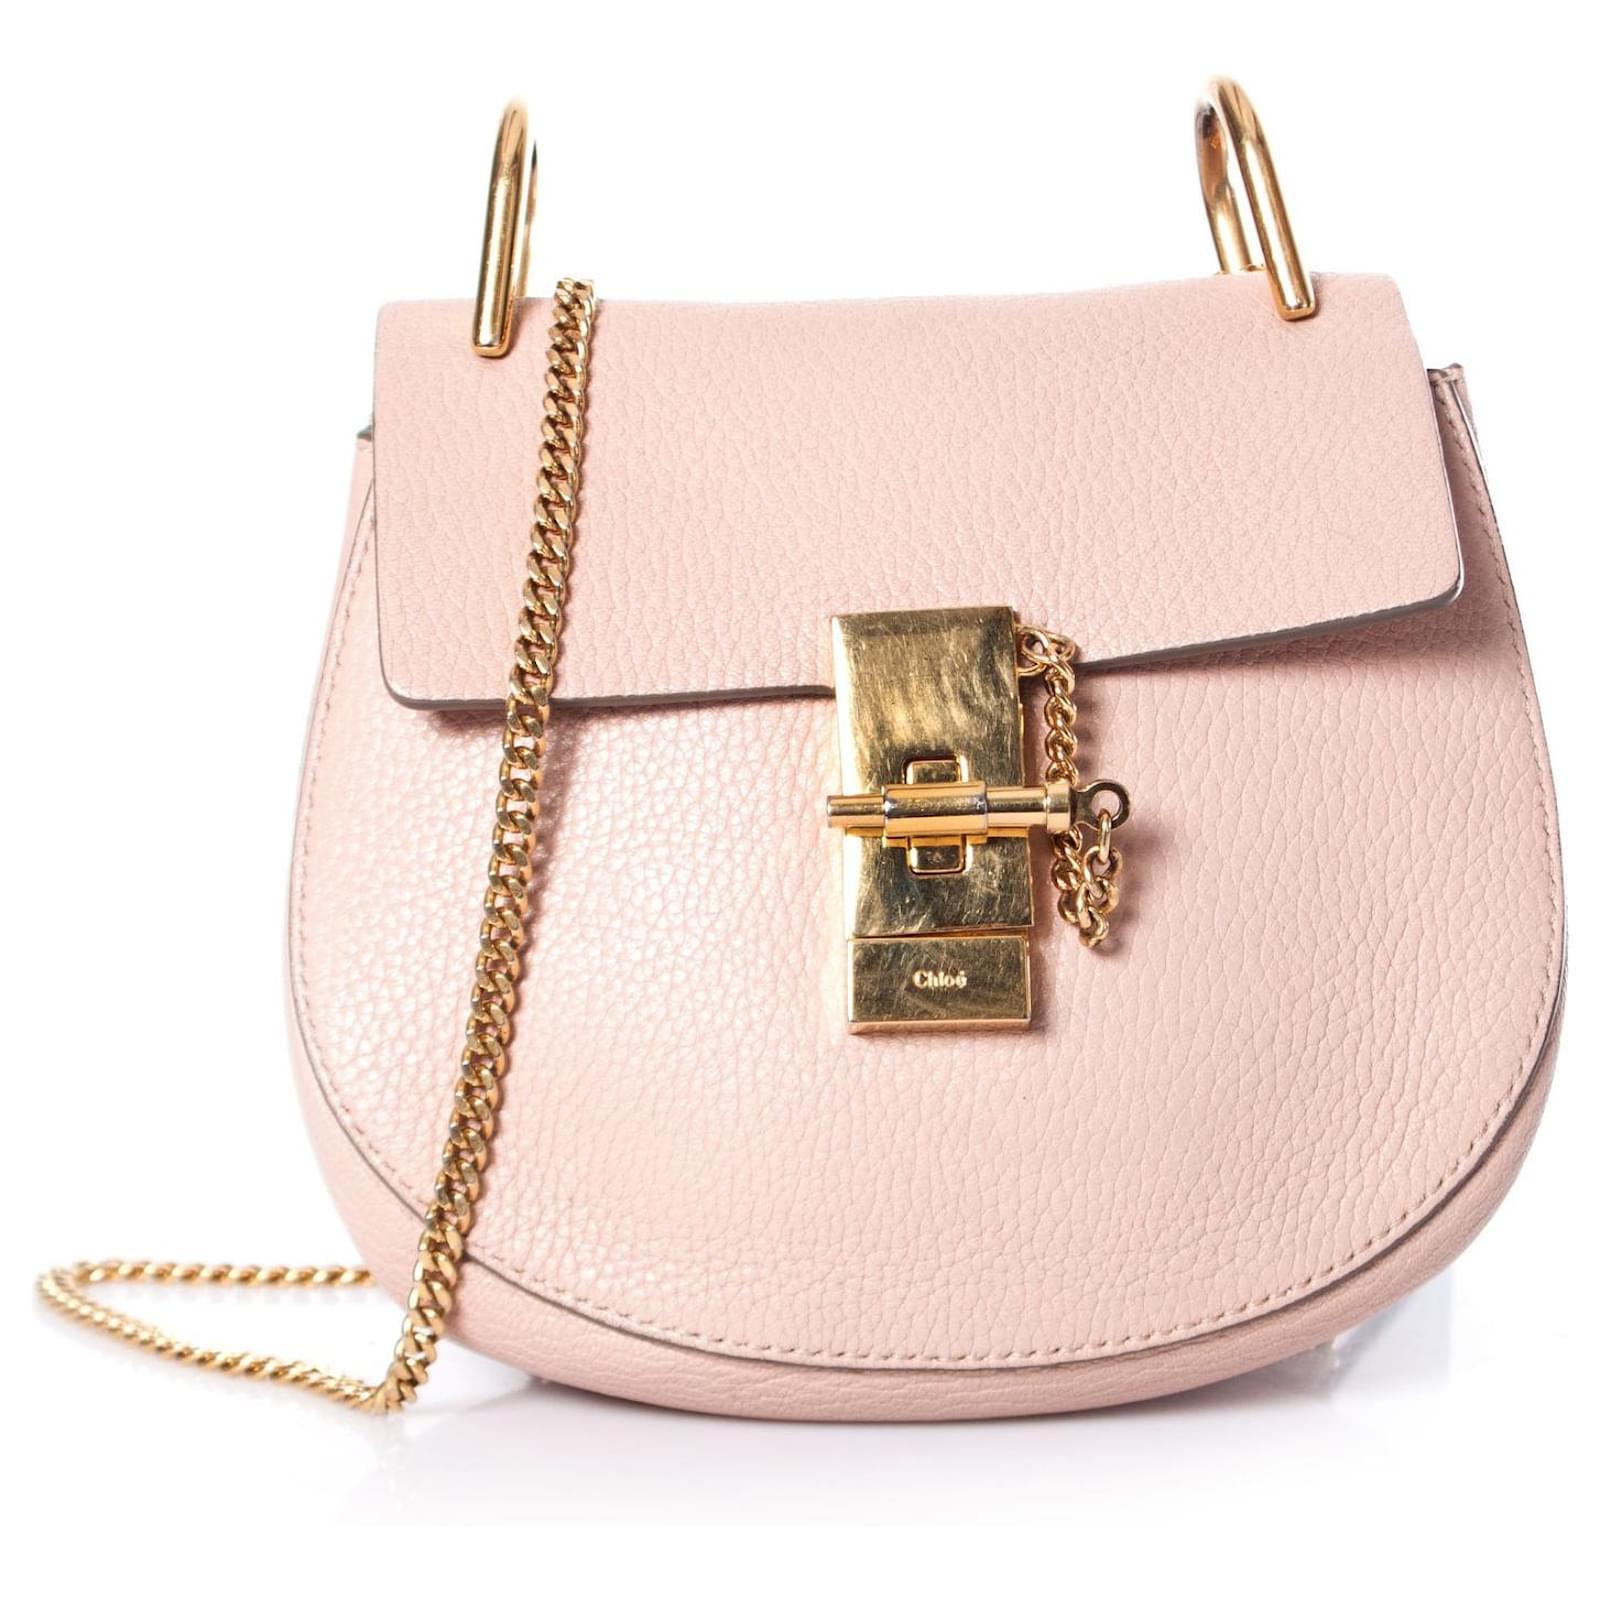 AUTHENTIC Chloe CHC18US107 Drew Shoulder Bag pink Leather 0050 | eBay